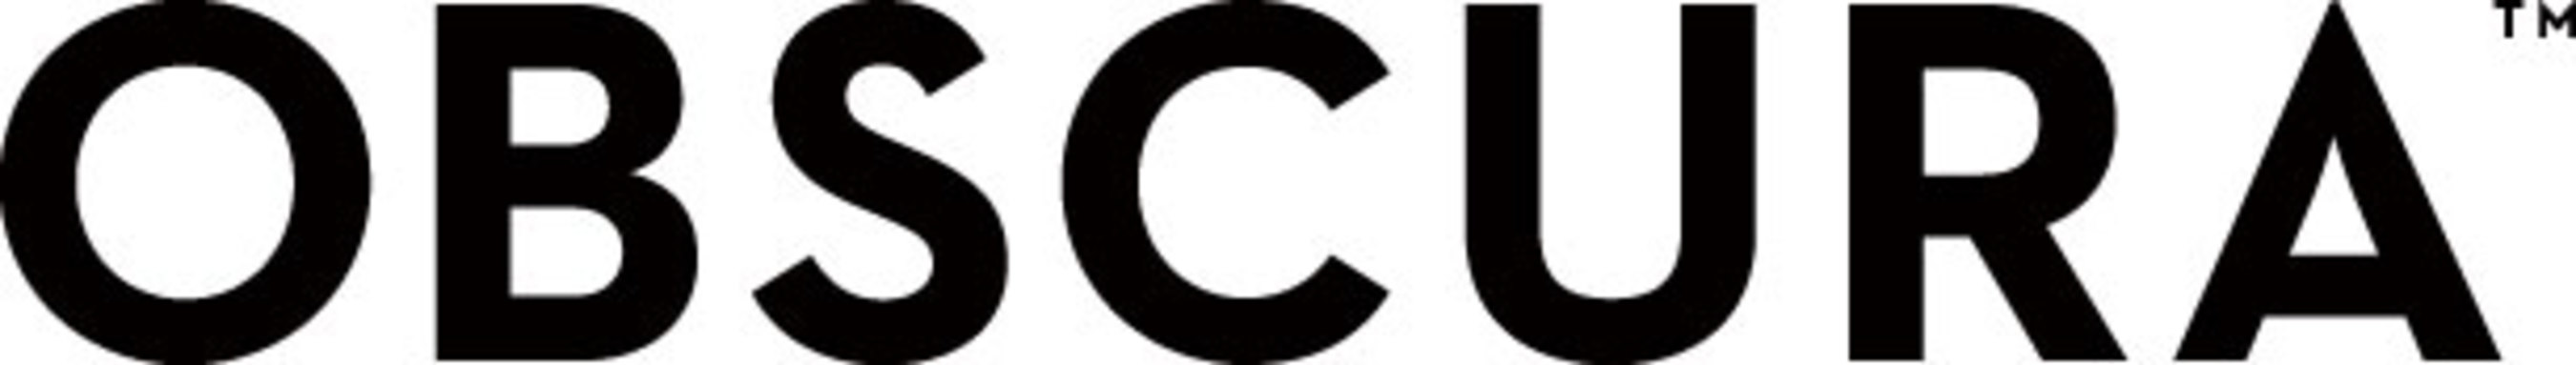 Obscura Digital Logo. (PRNewsFoto/Obscura Digital) (PRNewsFoto/)